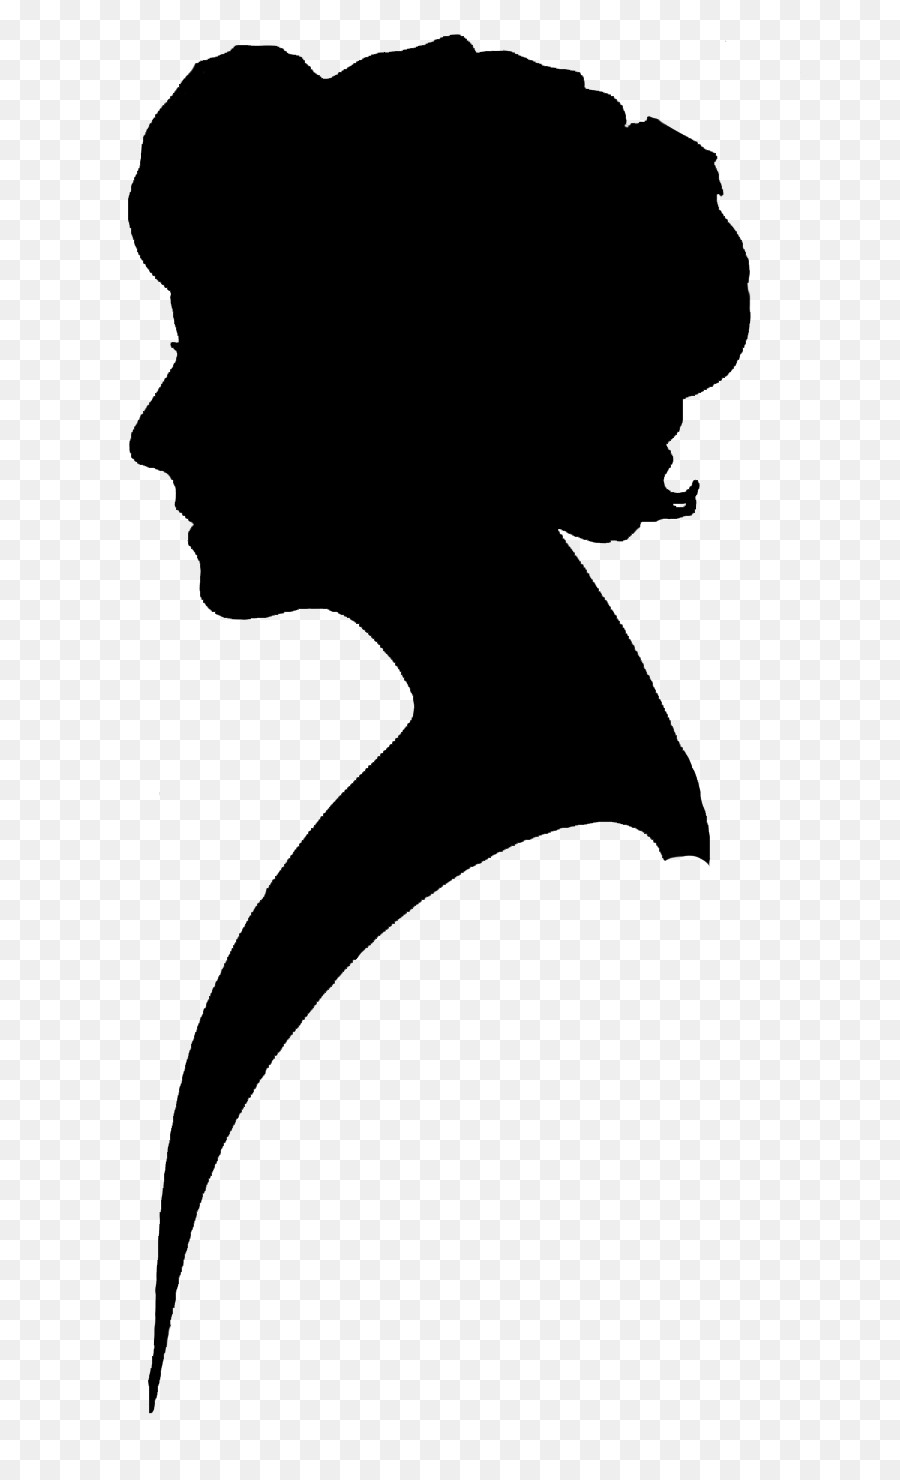 Victorian era Silhouette Female Clip art - Cliparts Silhouette png download - 712*1479 - Free Transparent Victorian Era png Download.